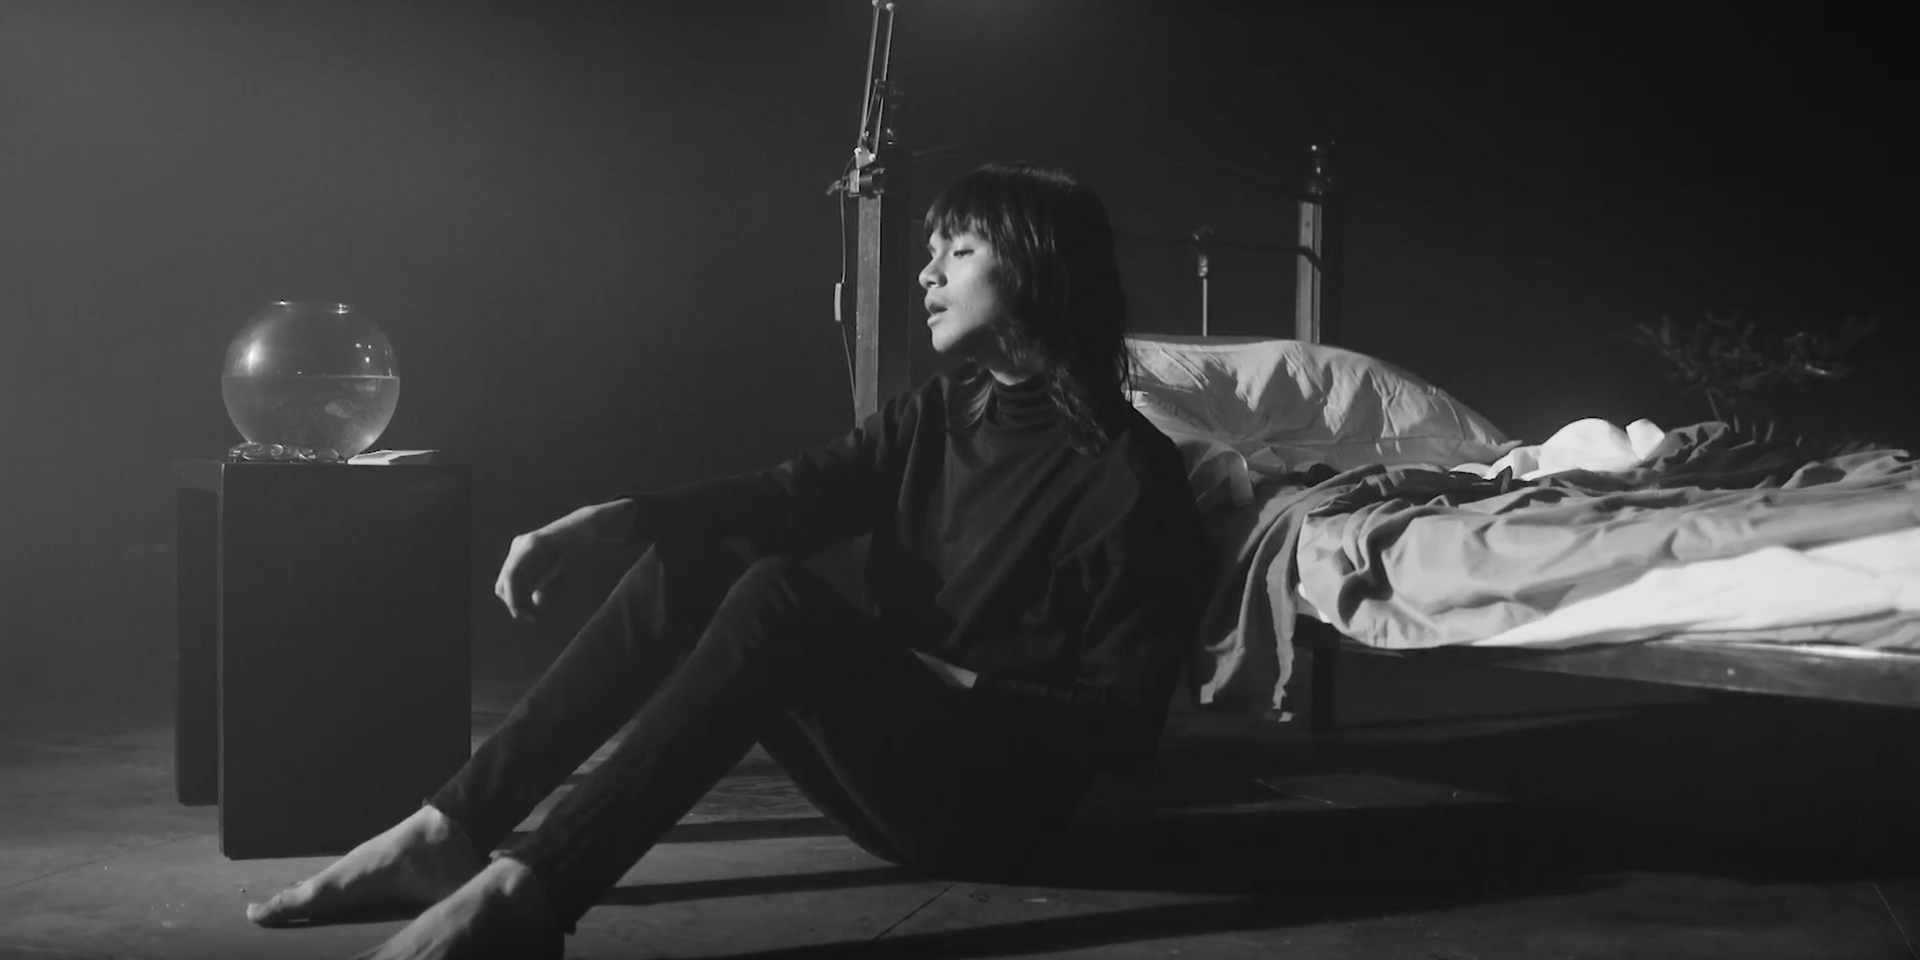 Unique debuts somber solo single 'Midnight Sky' – watch